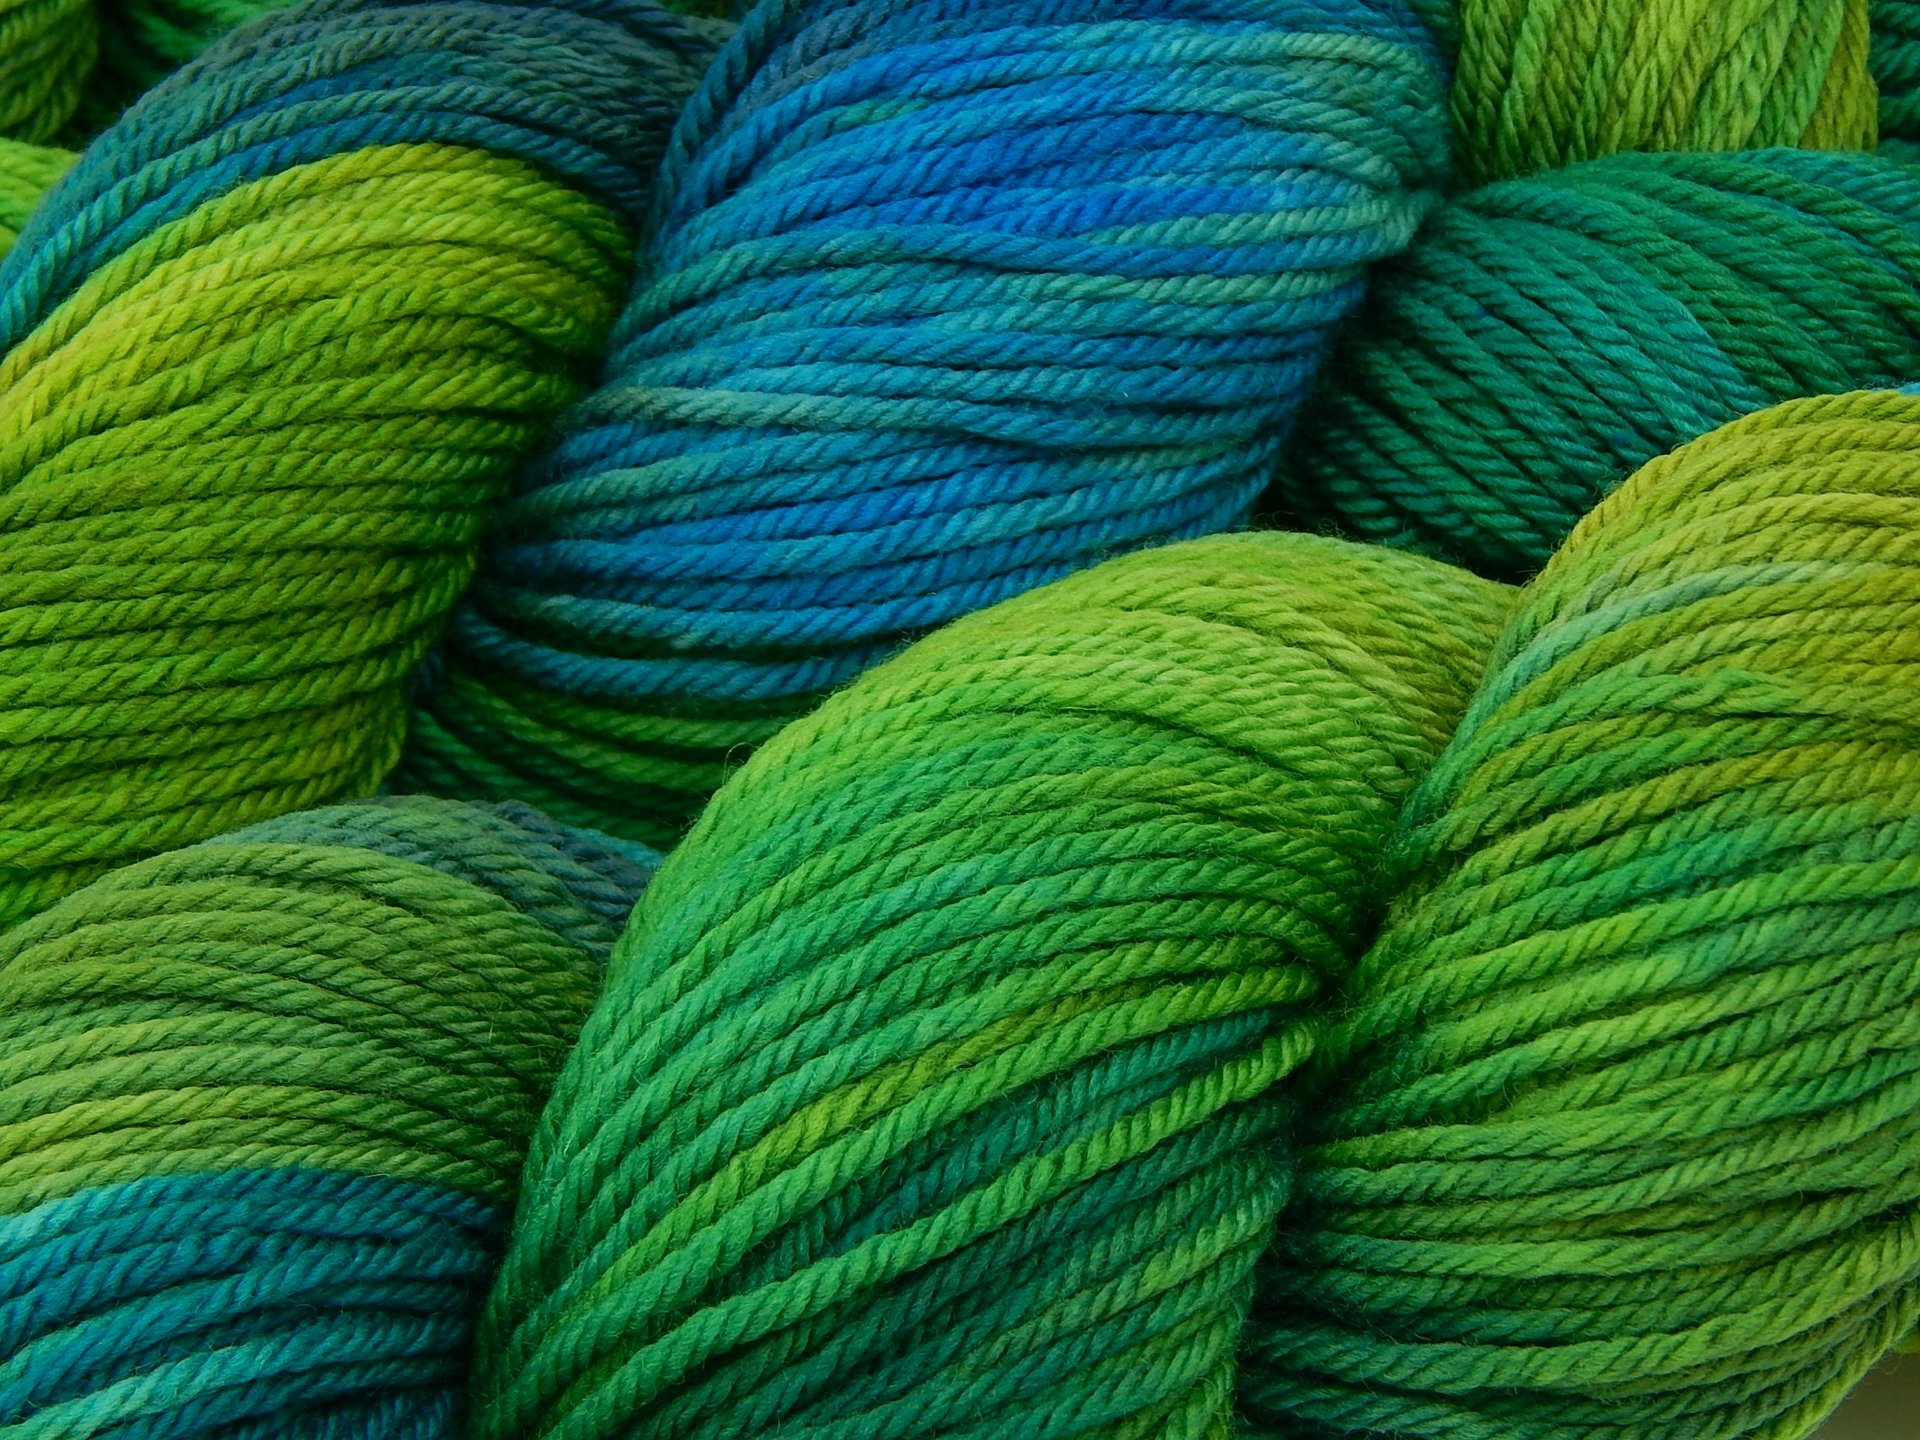 Hand Dyed Yarn, Worsted Weight 100% Superwash Merino Wool - Potluck Blues & Greens - Indie Dyer OOAK Knitting Crochet Yarn, Tropical Colors